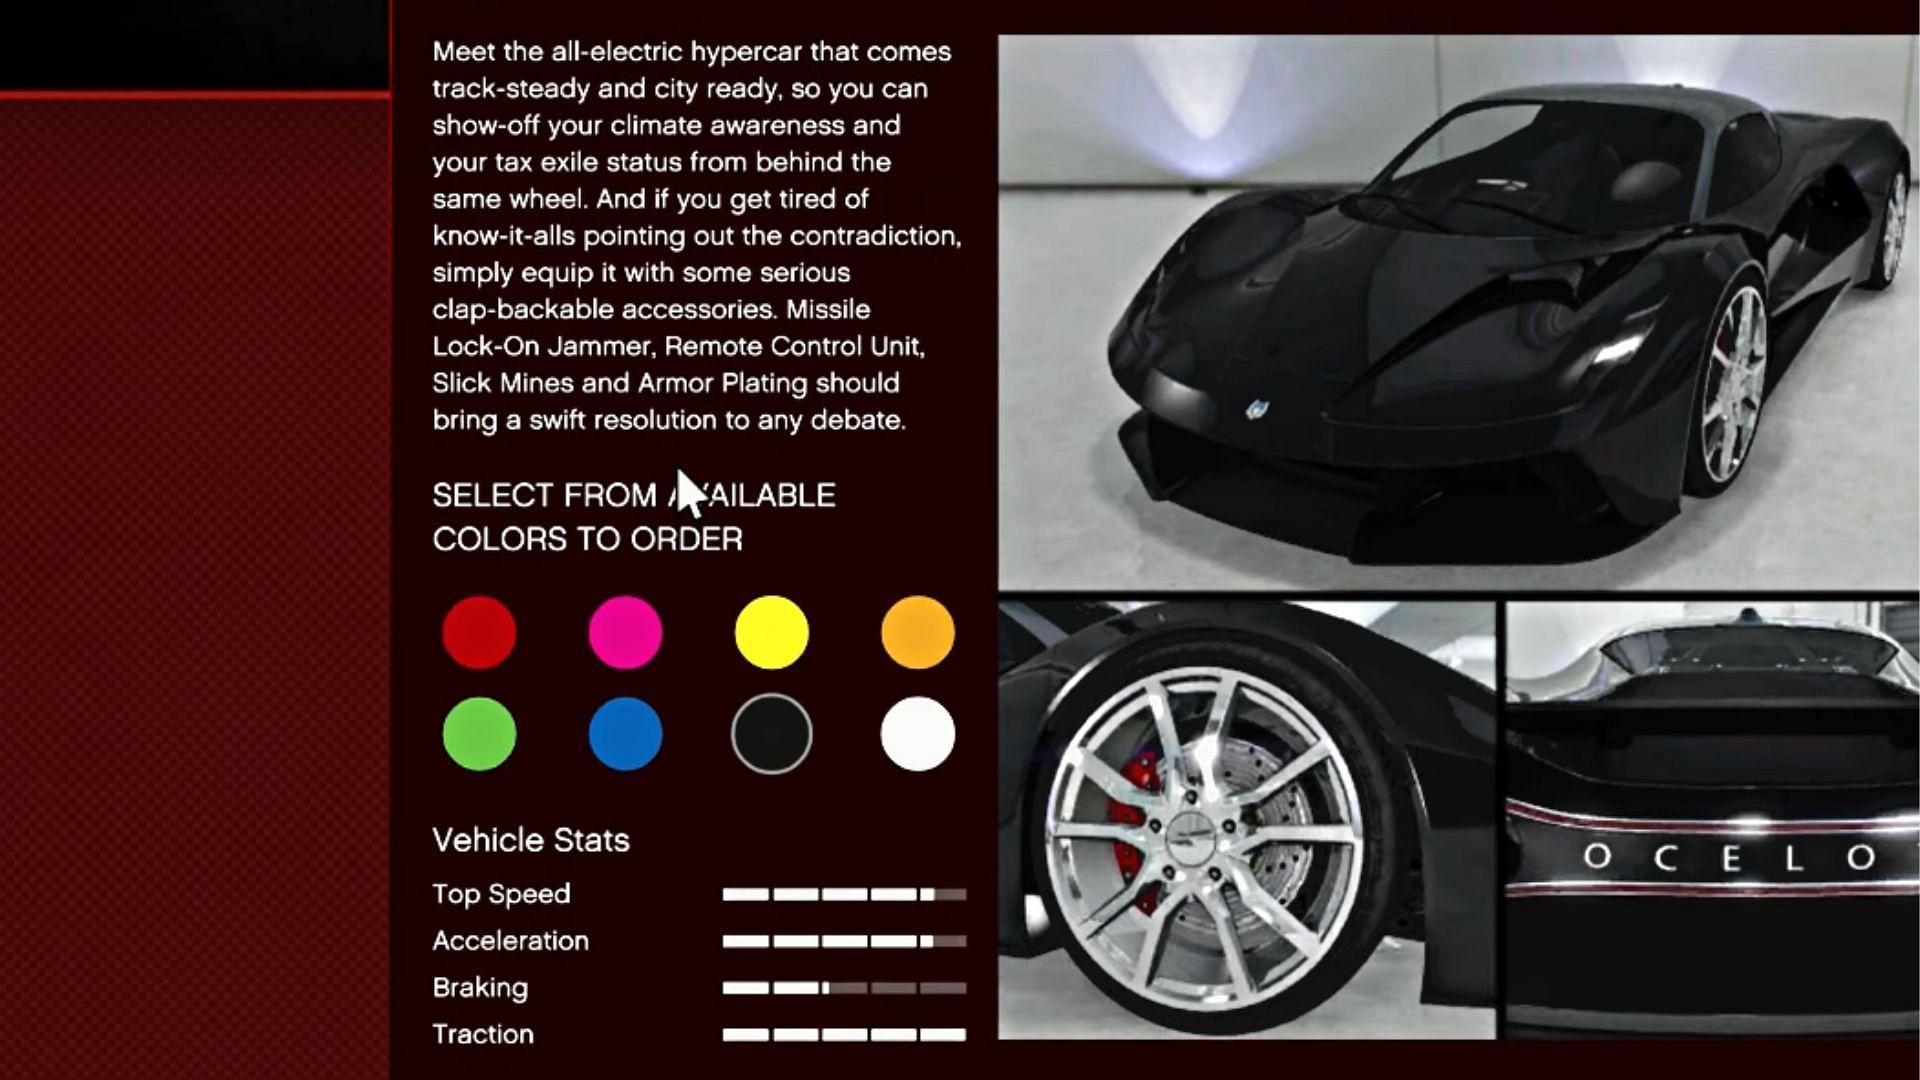 Ocelot Virtue  GTA 5 Online Vehicle Stats, Price, How To Get